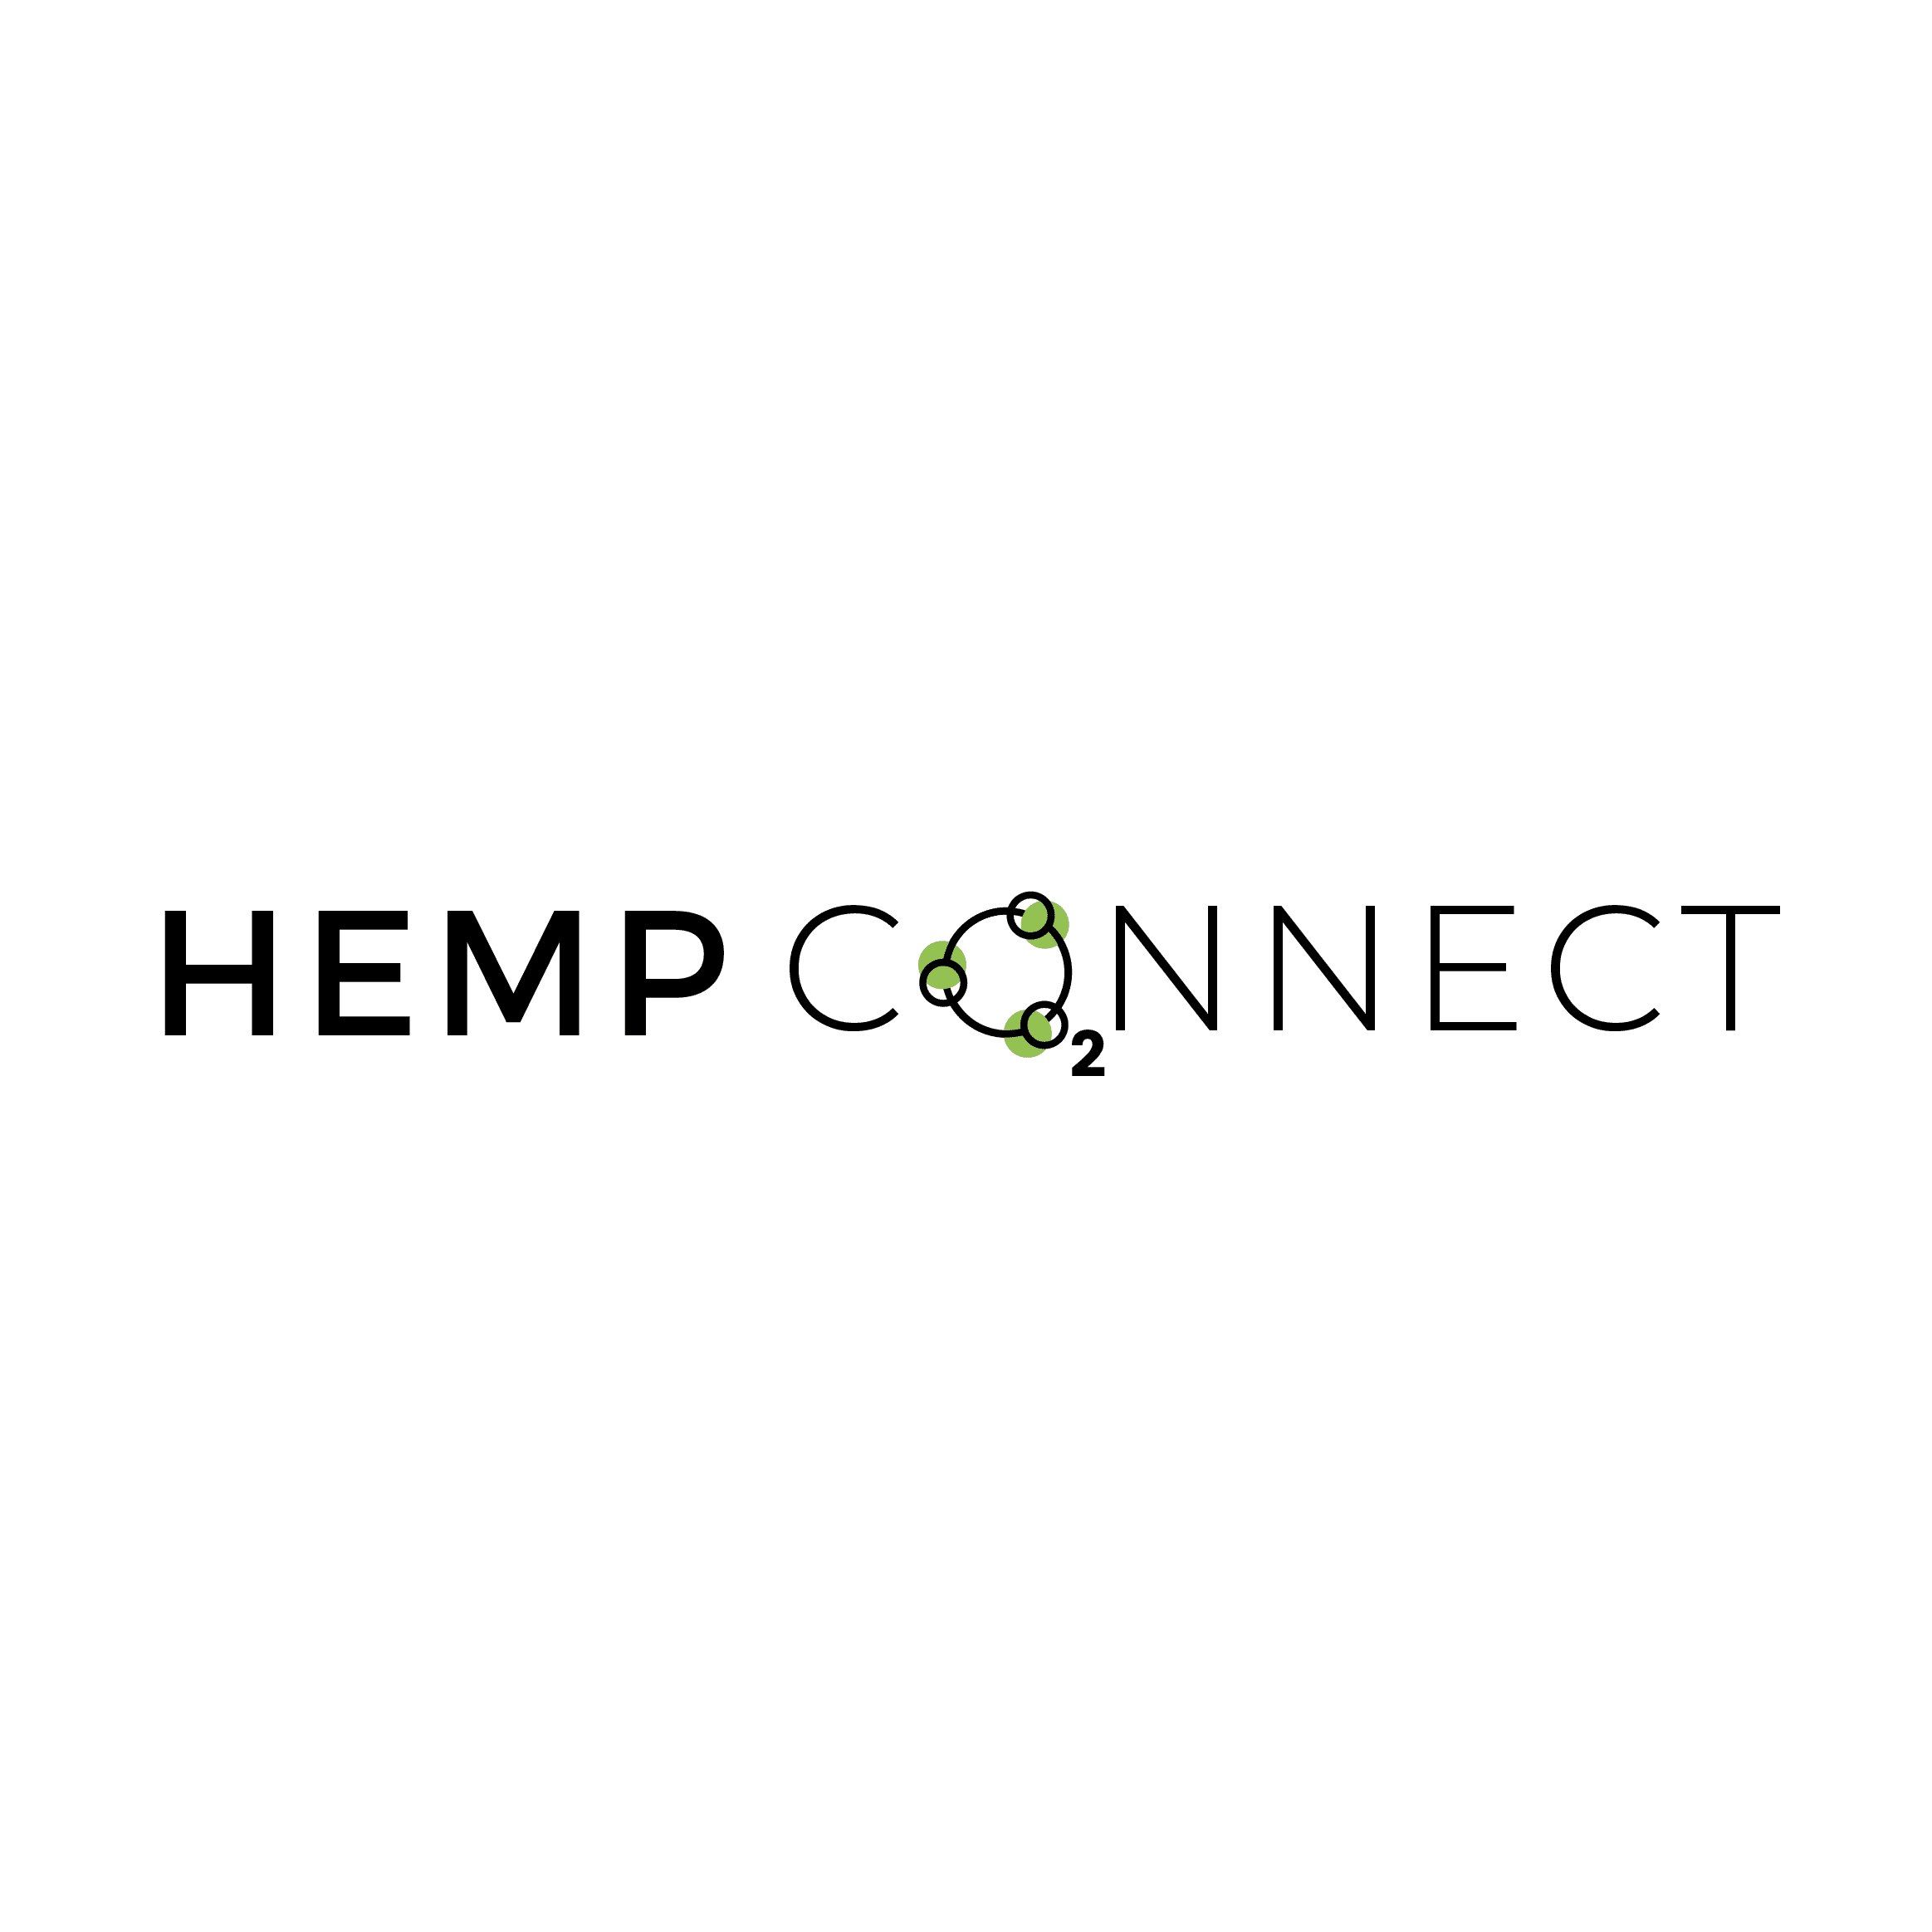 HempConnect news